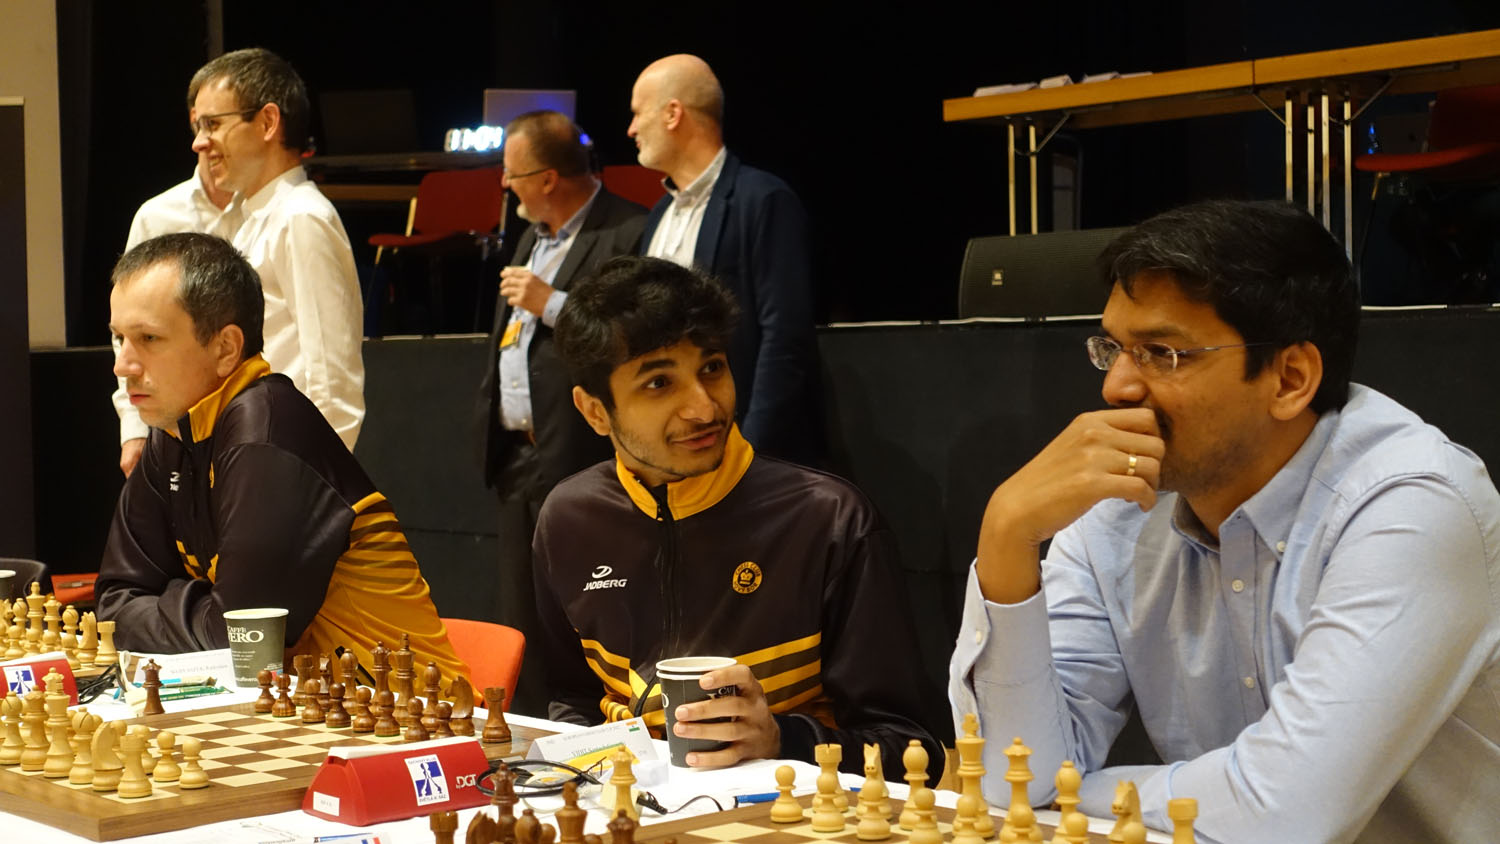 EUROPEAN CLUB CUP STARTS IN TWO DAYS – European Chess Union